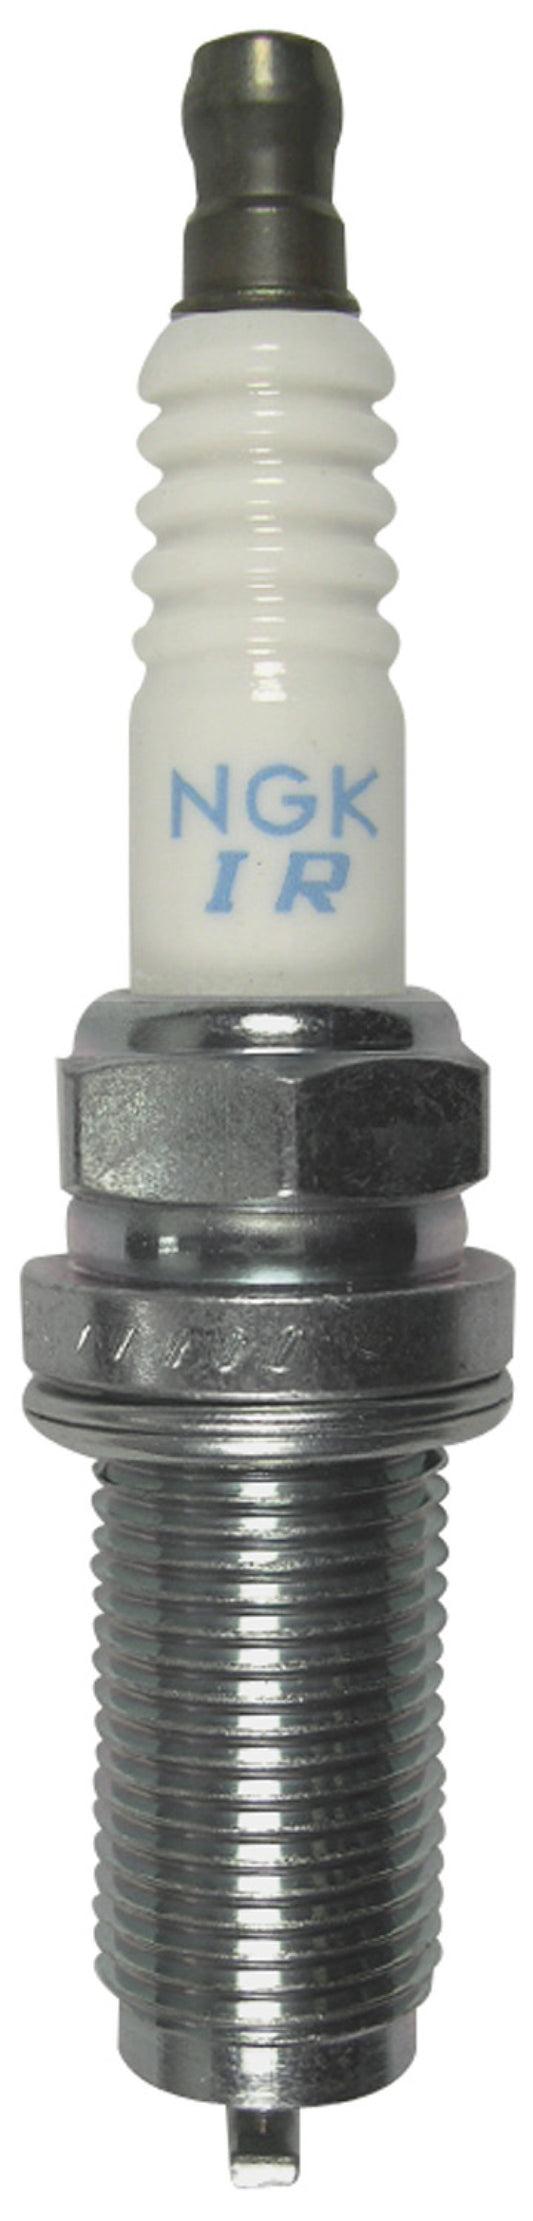 NGK Iridium/Platinum Spark Plug Box of 4 (LZFR6AI)